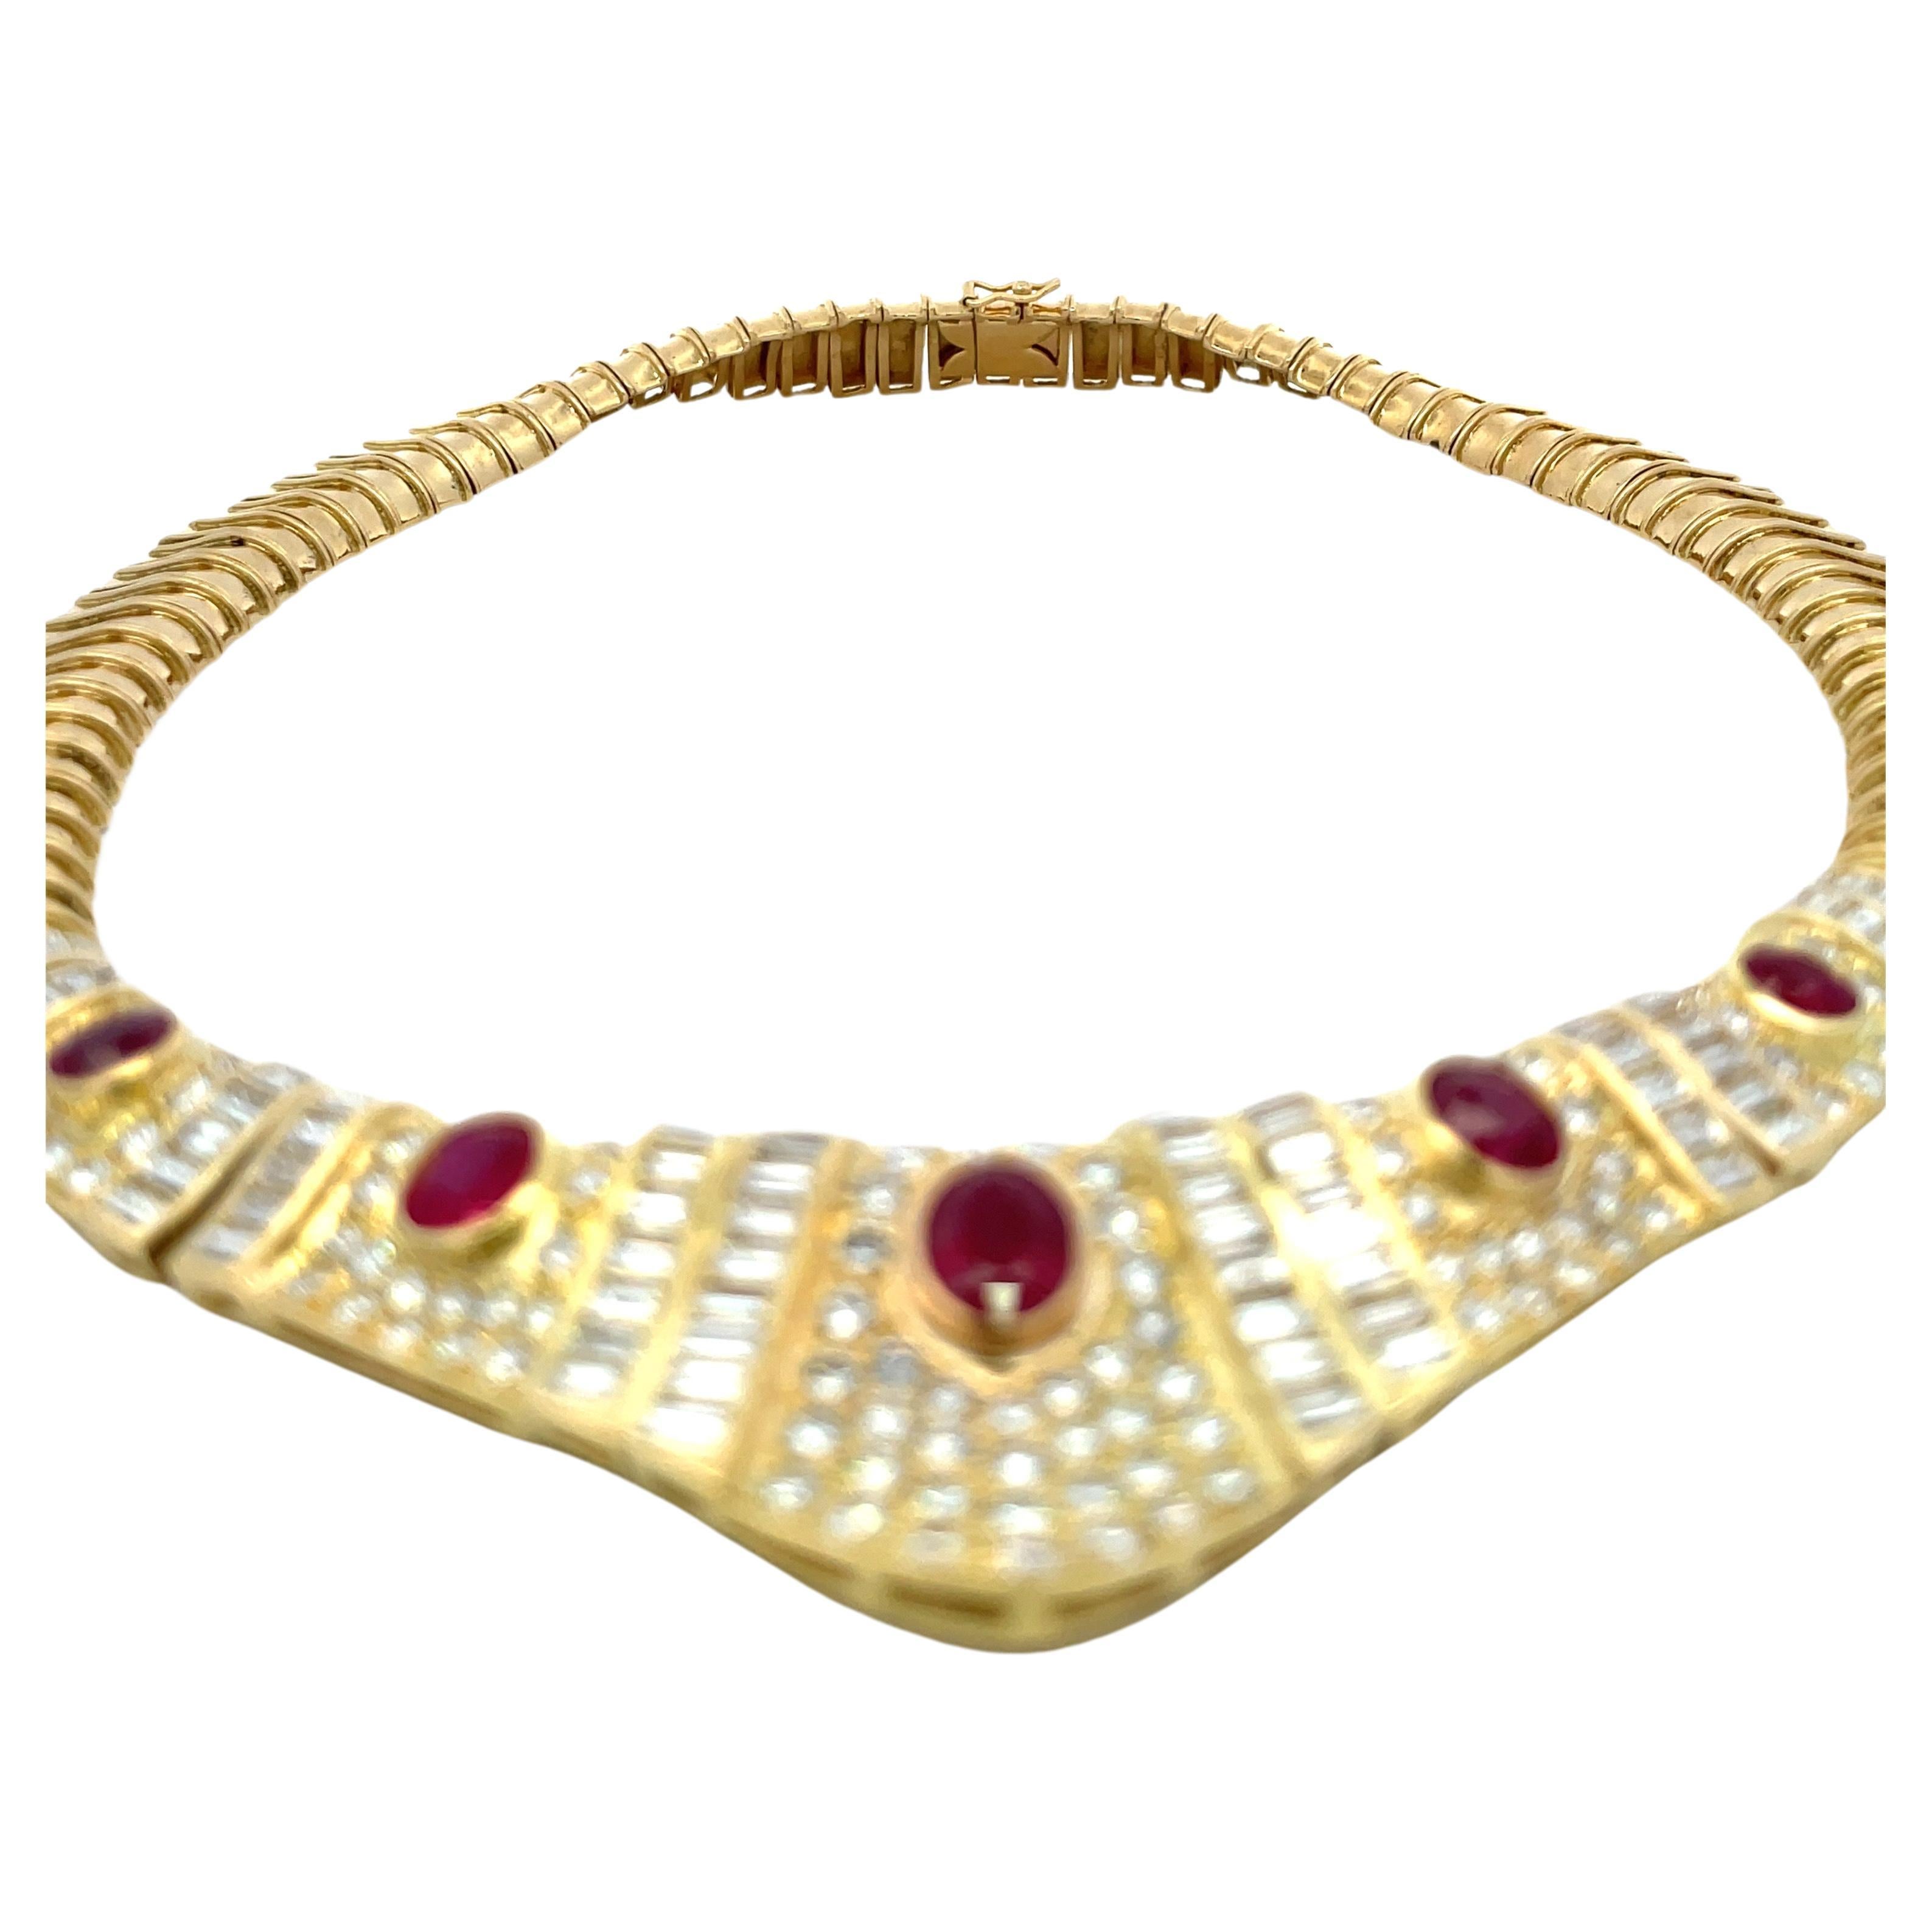 Certified Burma Ruby Diamond Collar Necklace 24.50 Carats 18 Karat Yellow Gold For Sale 1